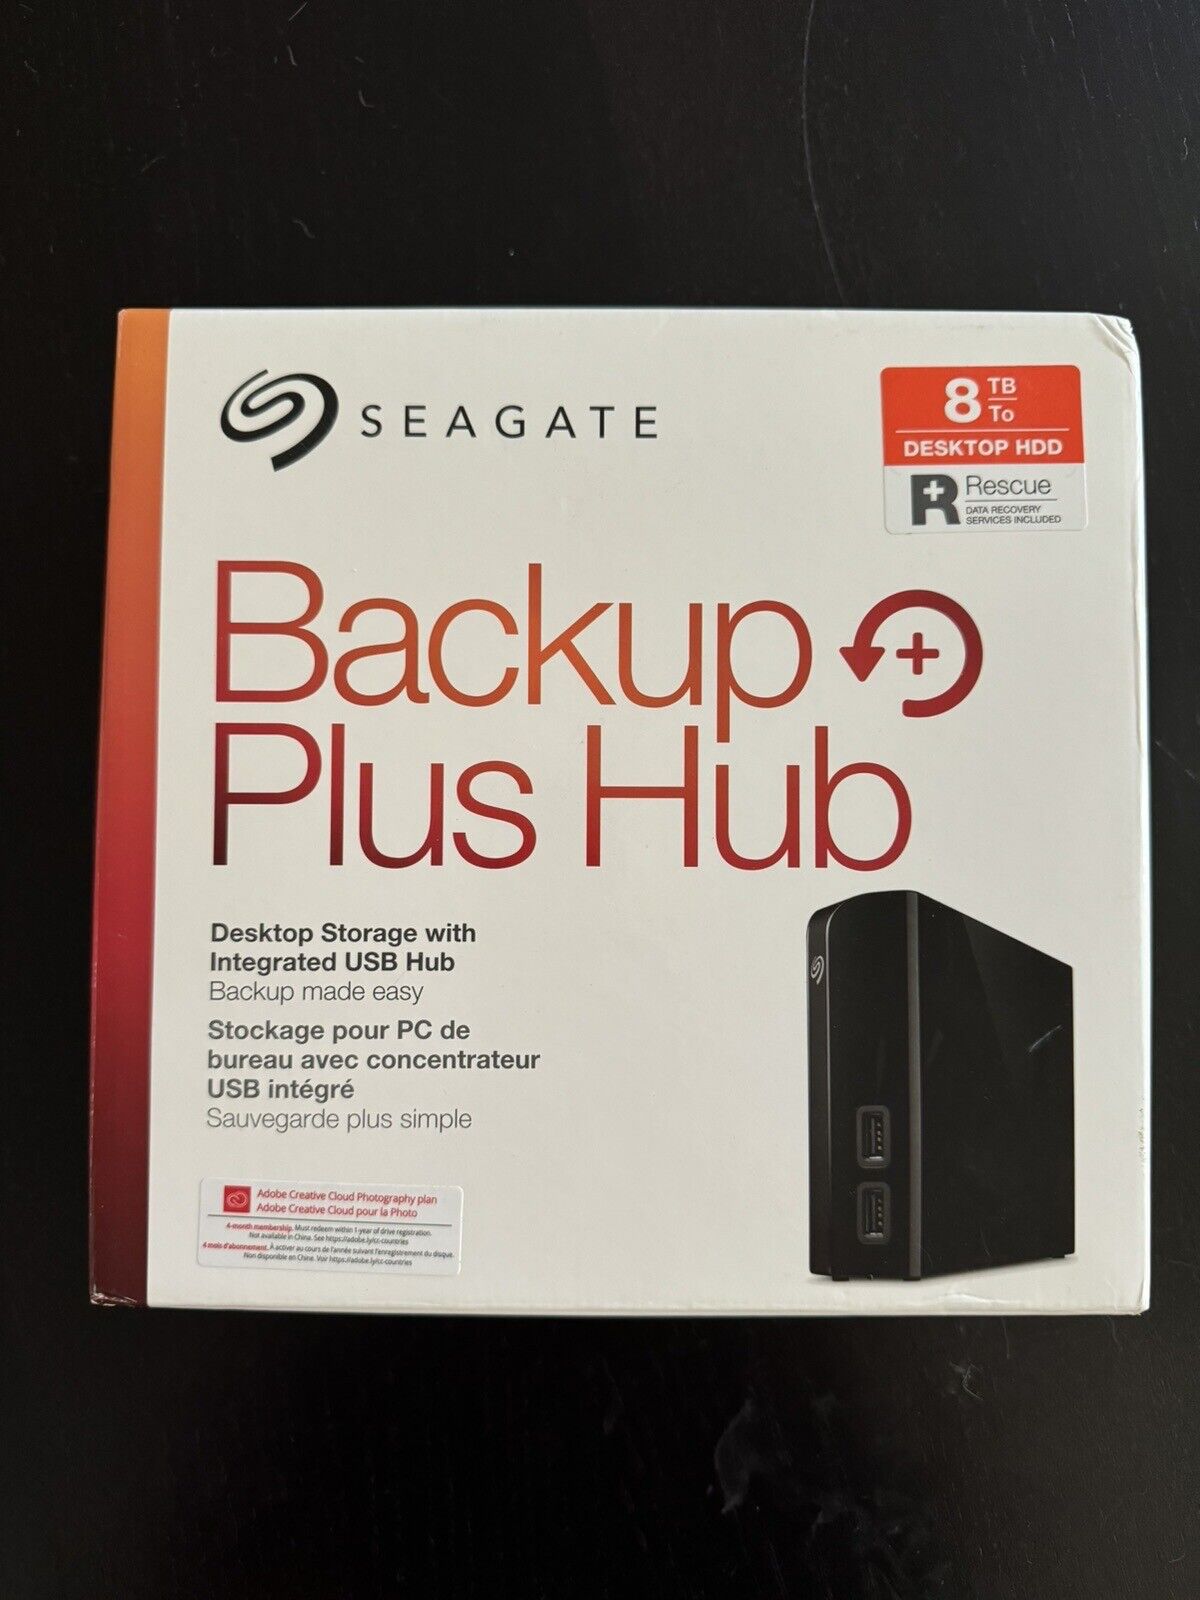 NEW Factory Sealed Seagate Backup Plus Hub 8 TB External Hard Drive - Black